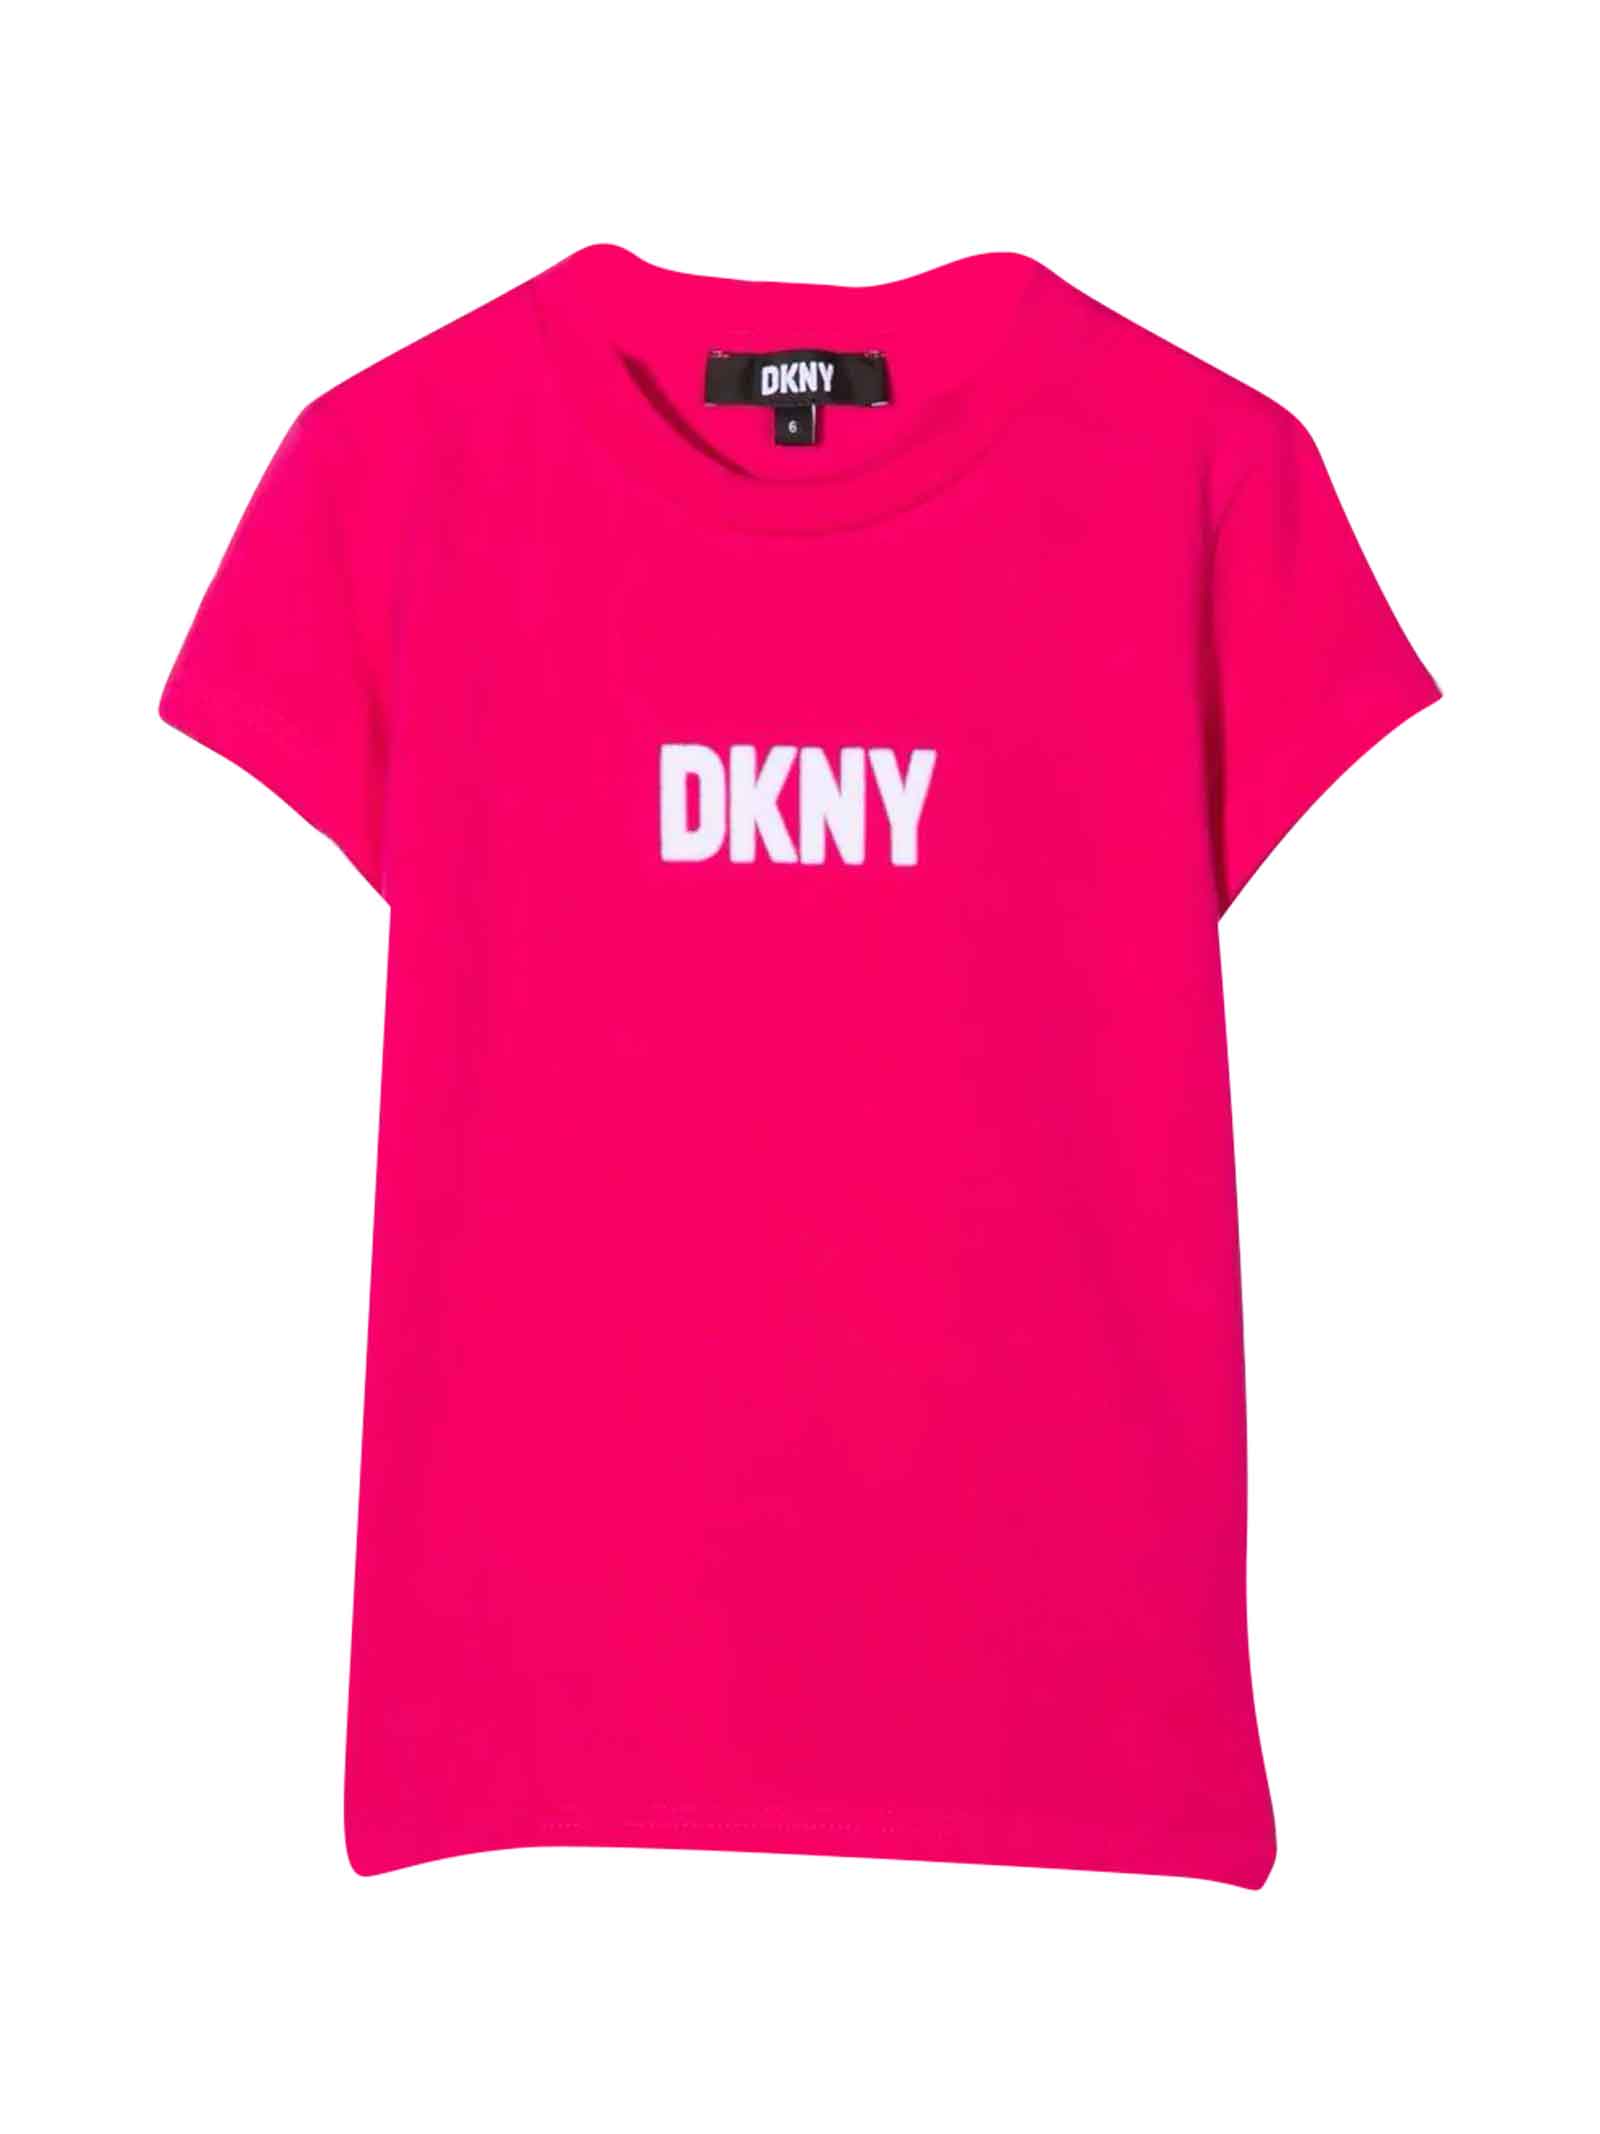 DKNY Fuchsia T-shirt Teen Girl